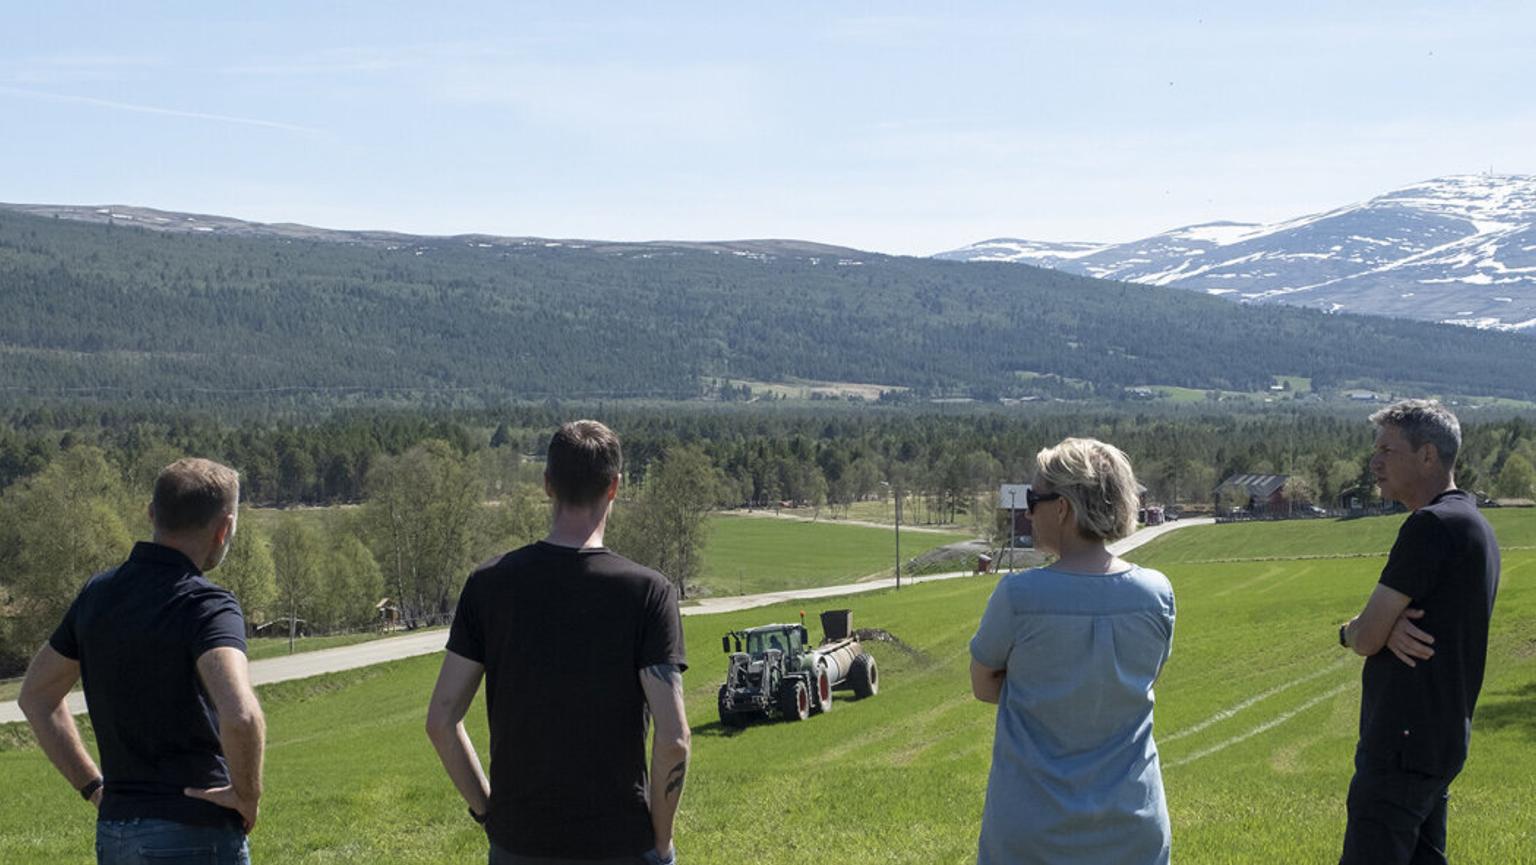 NEO fertiliser being spread on a field at Galåvolden Farm in Røros, Norway.